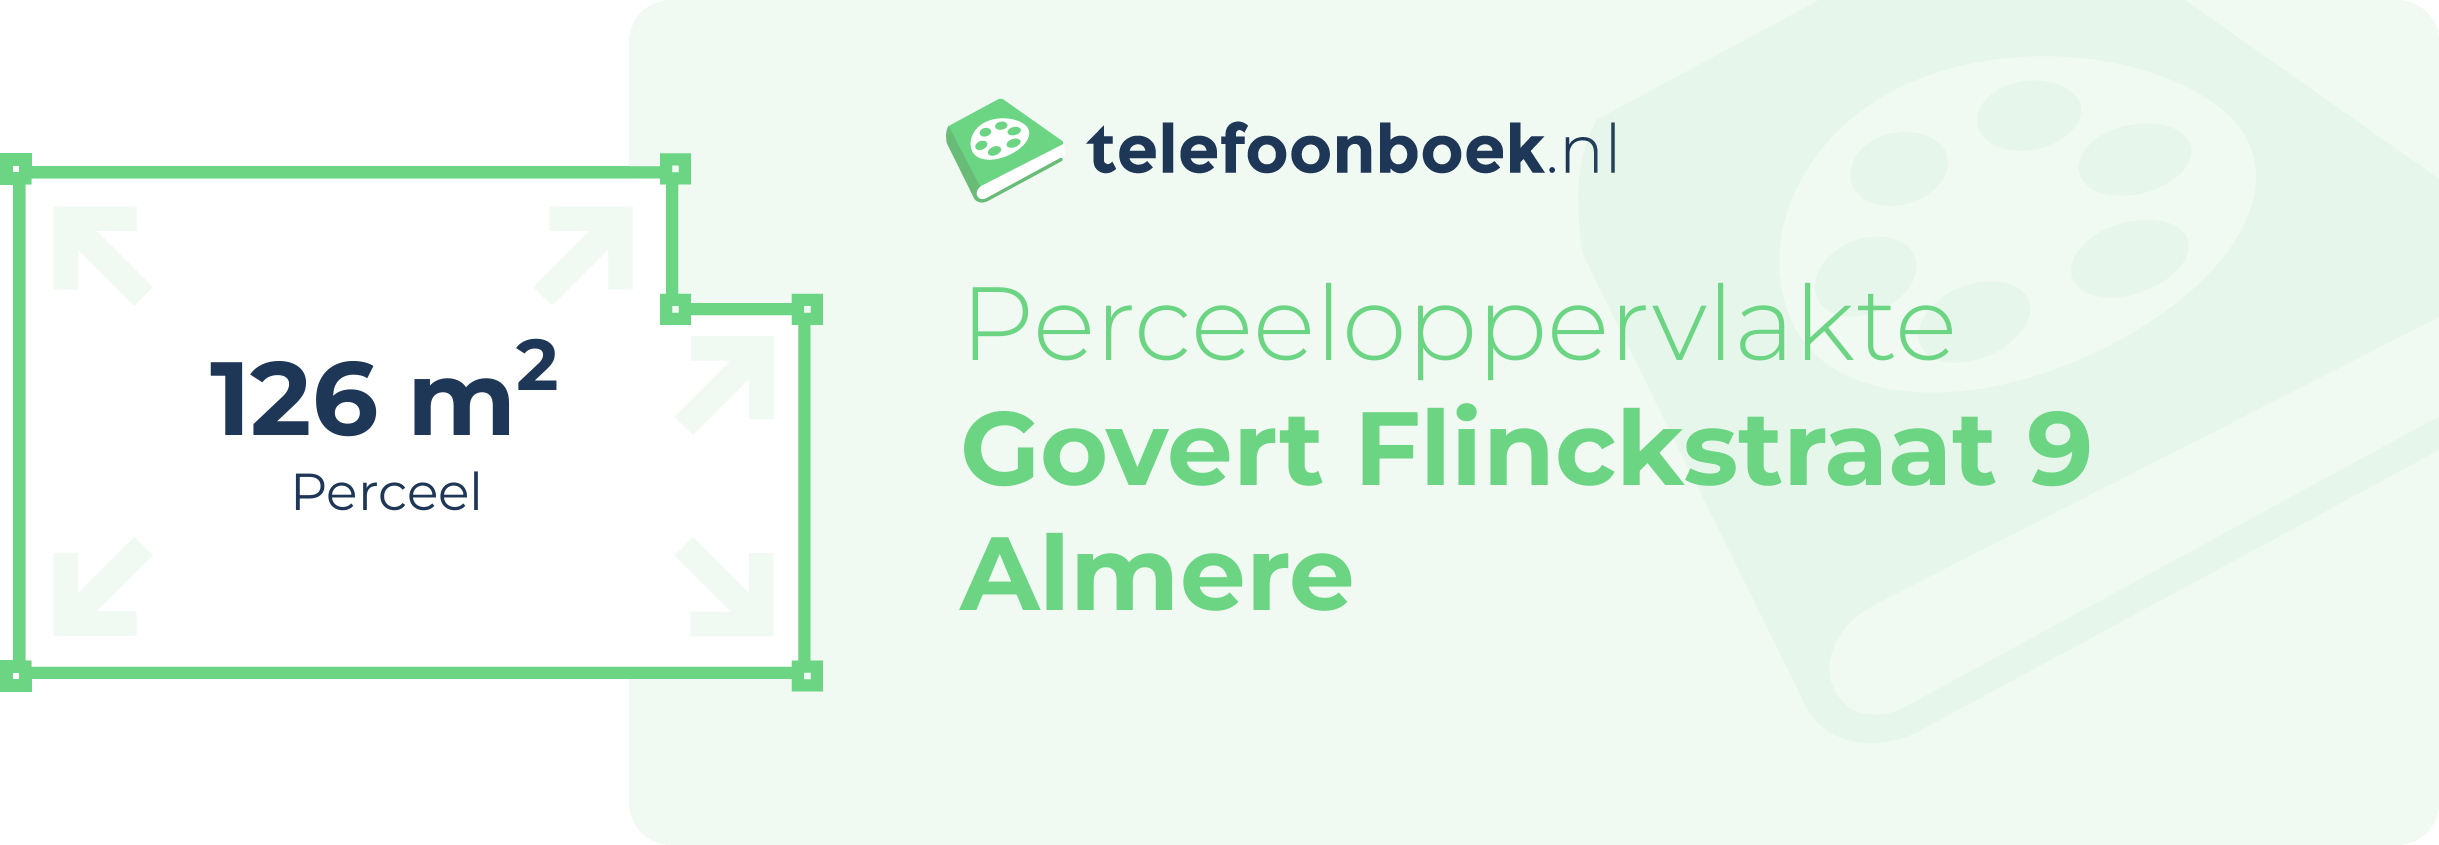 Perceeloppervlakte Govert Flinckstraat 9 Almere